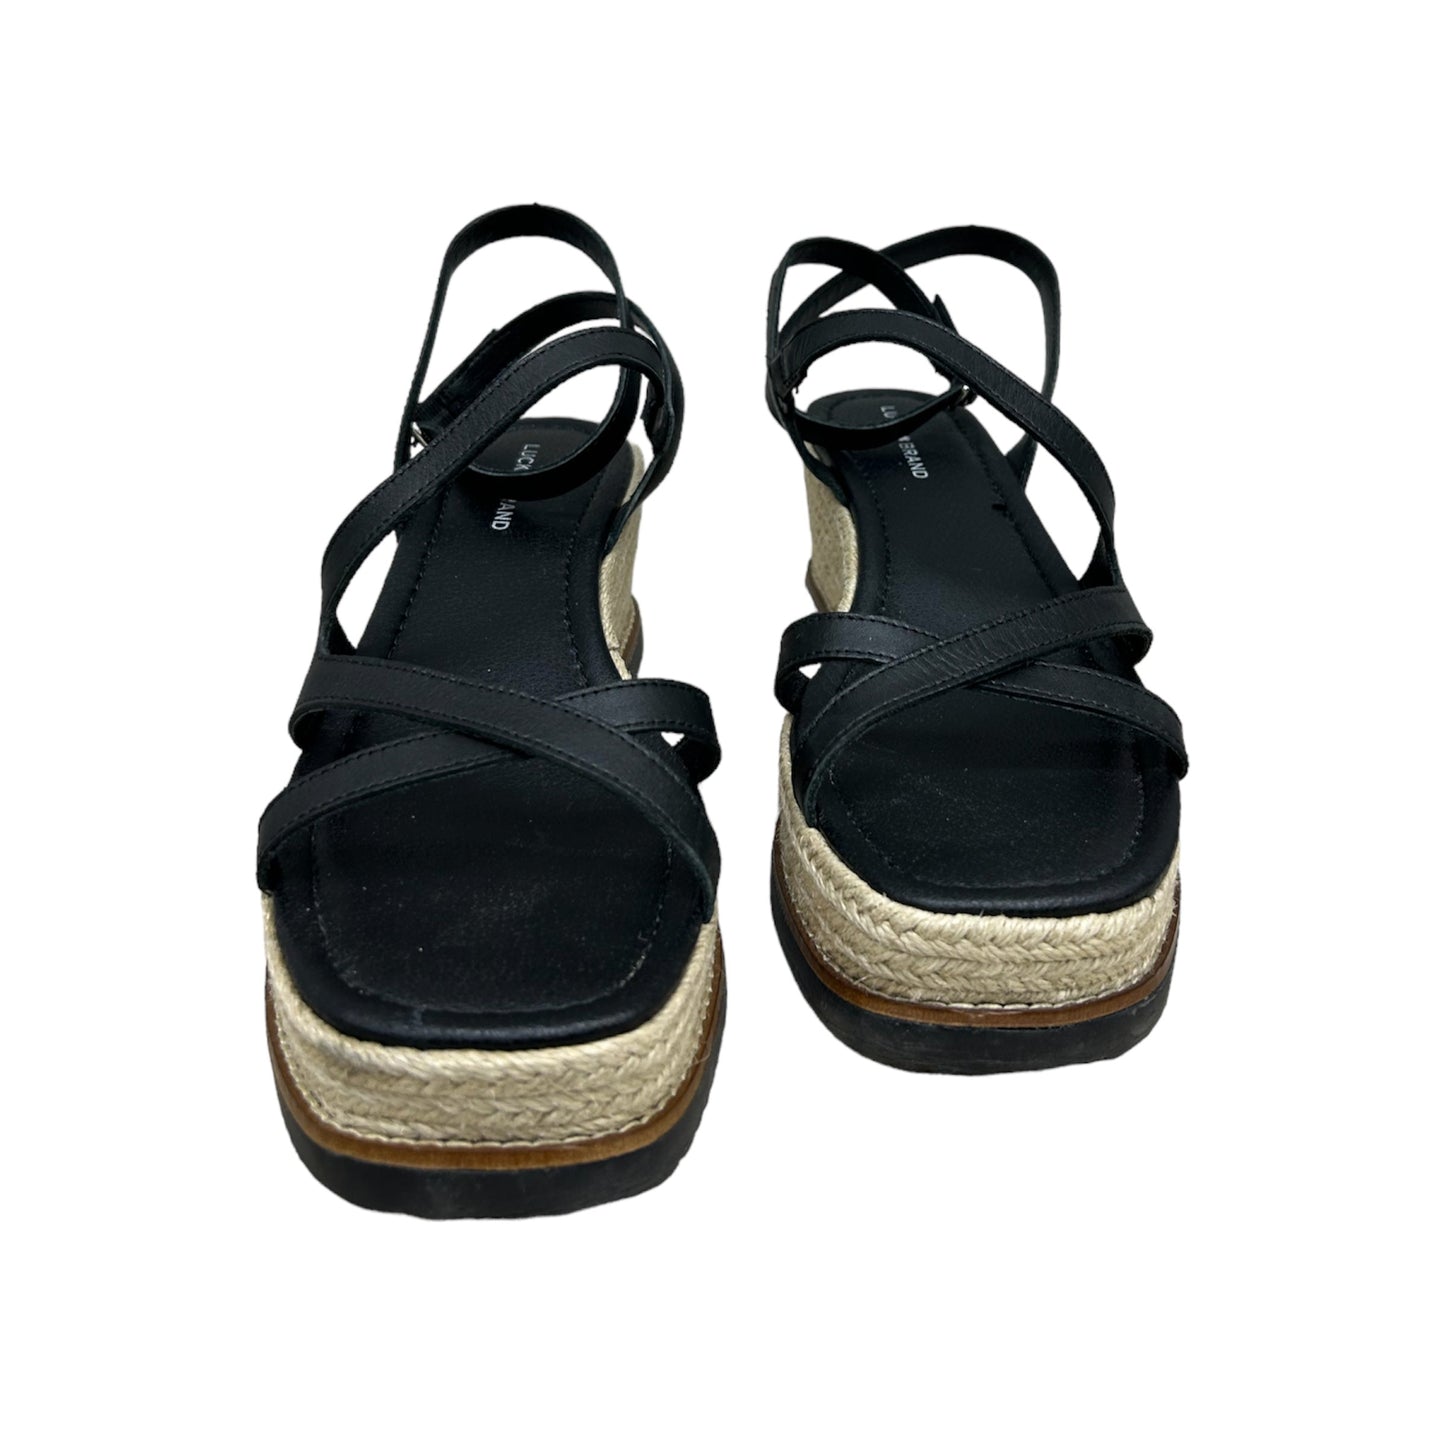 Sandals Heels Platform By Lucky Brand  Size: 8.5